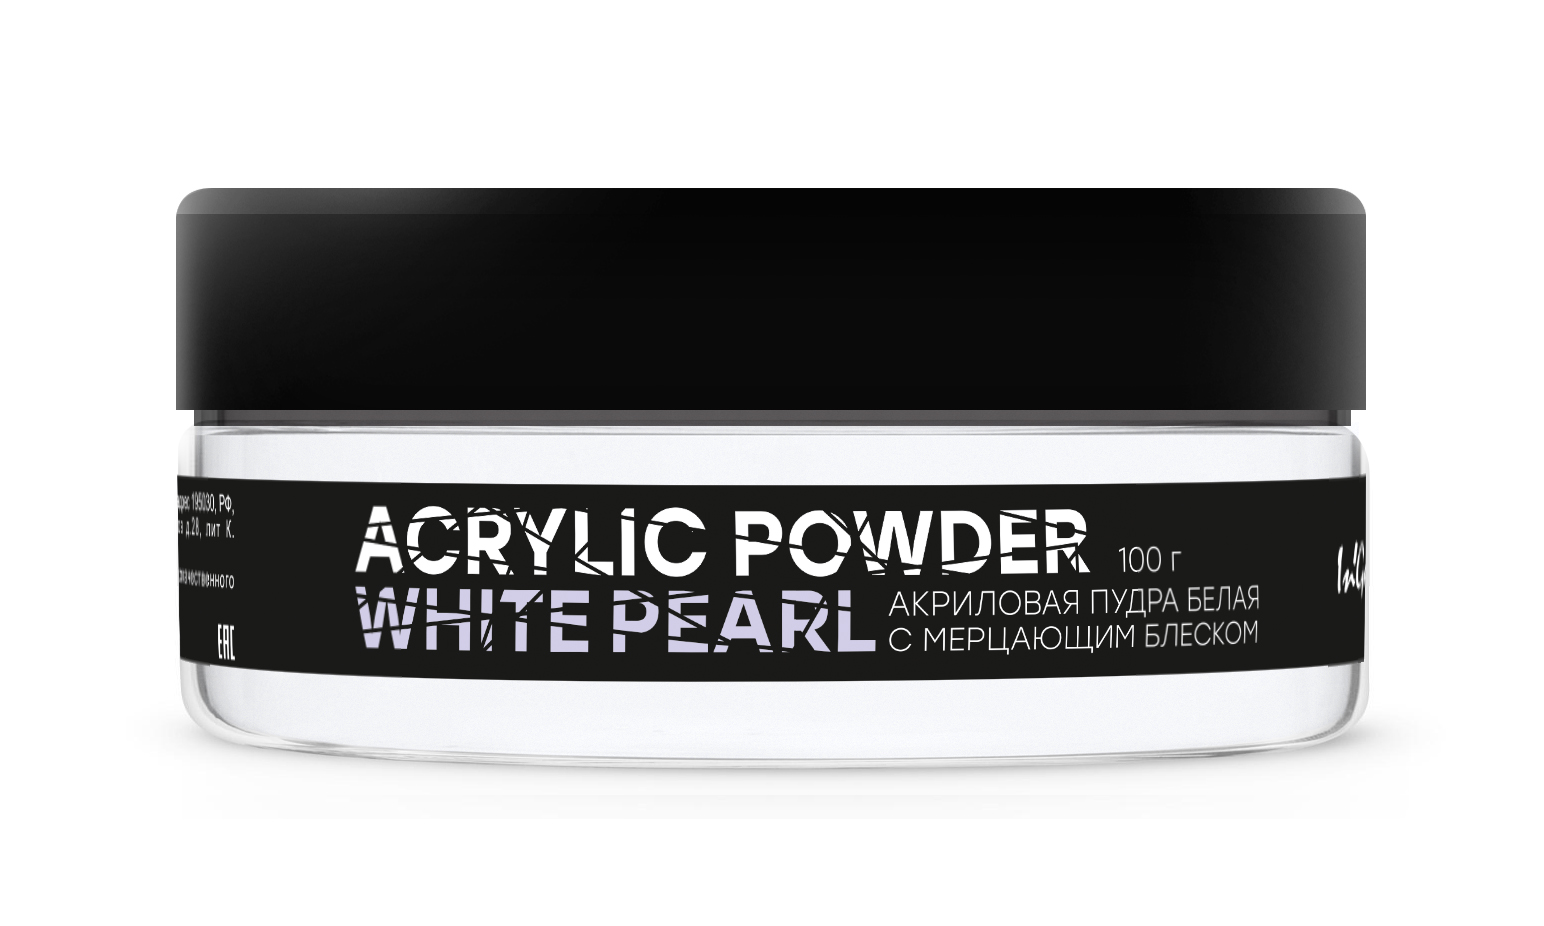 Акриловая пудра белая с мерцанием Acrylic Powder Classic White Pearl, 100 г ezflow акриловая ярко белая пудра truly white acrylic powder 21г